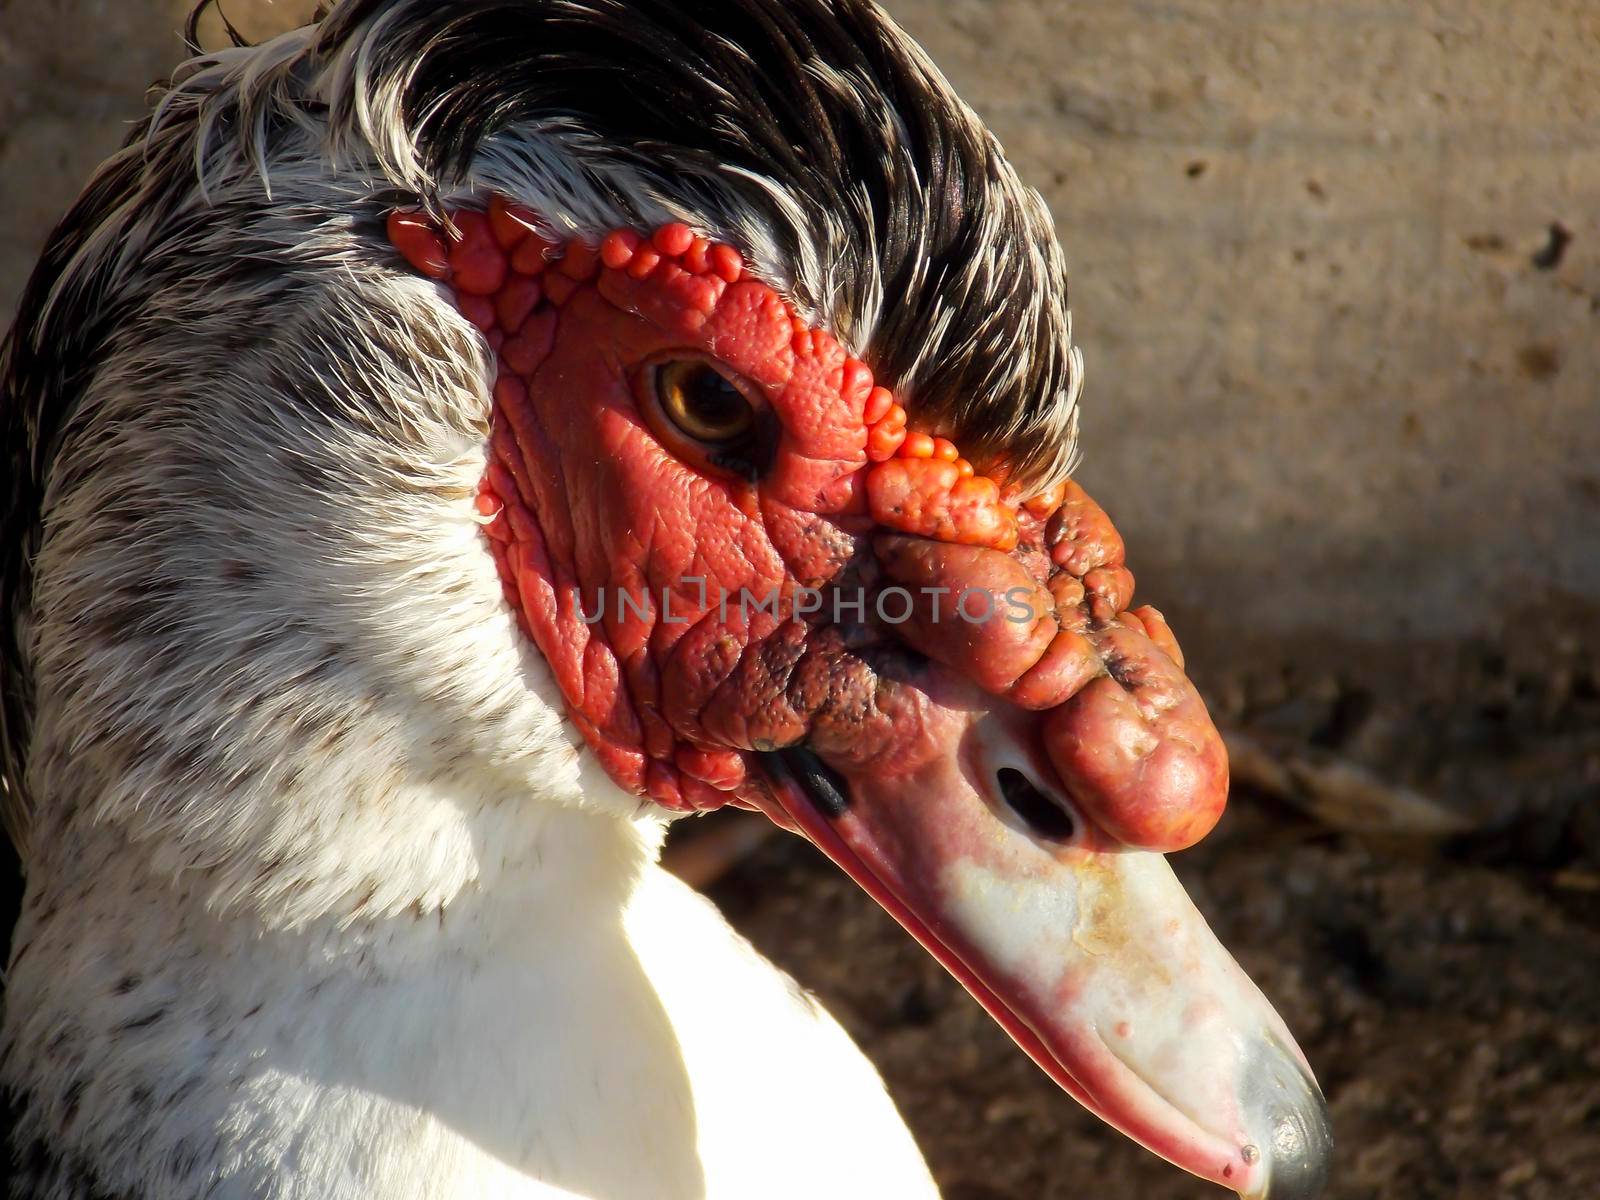 Male Muscovy Duck Close Up by swissChard7